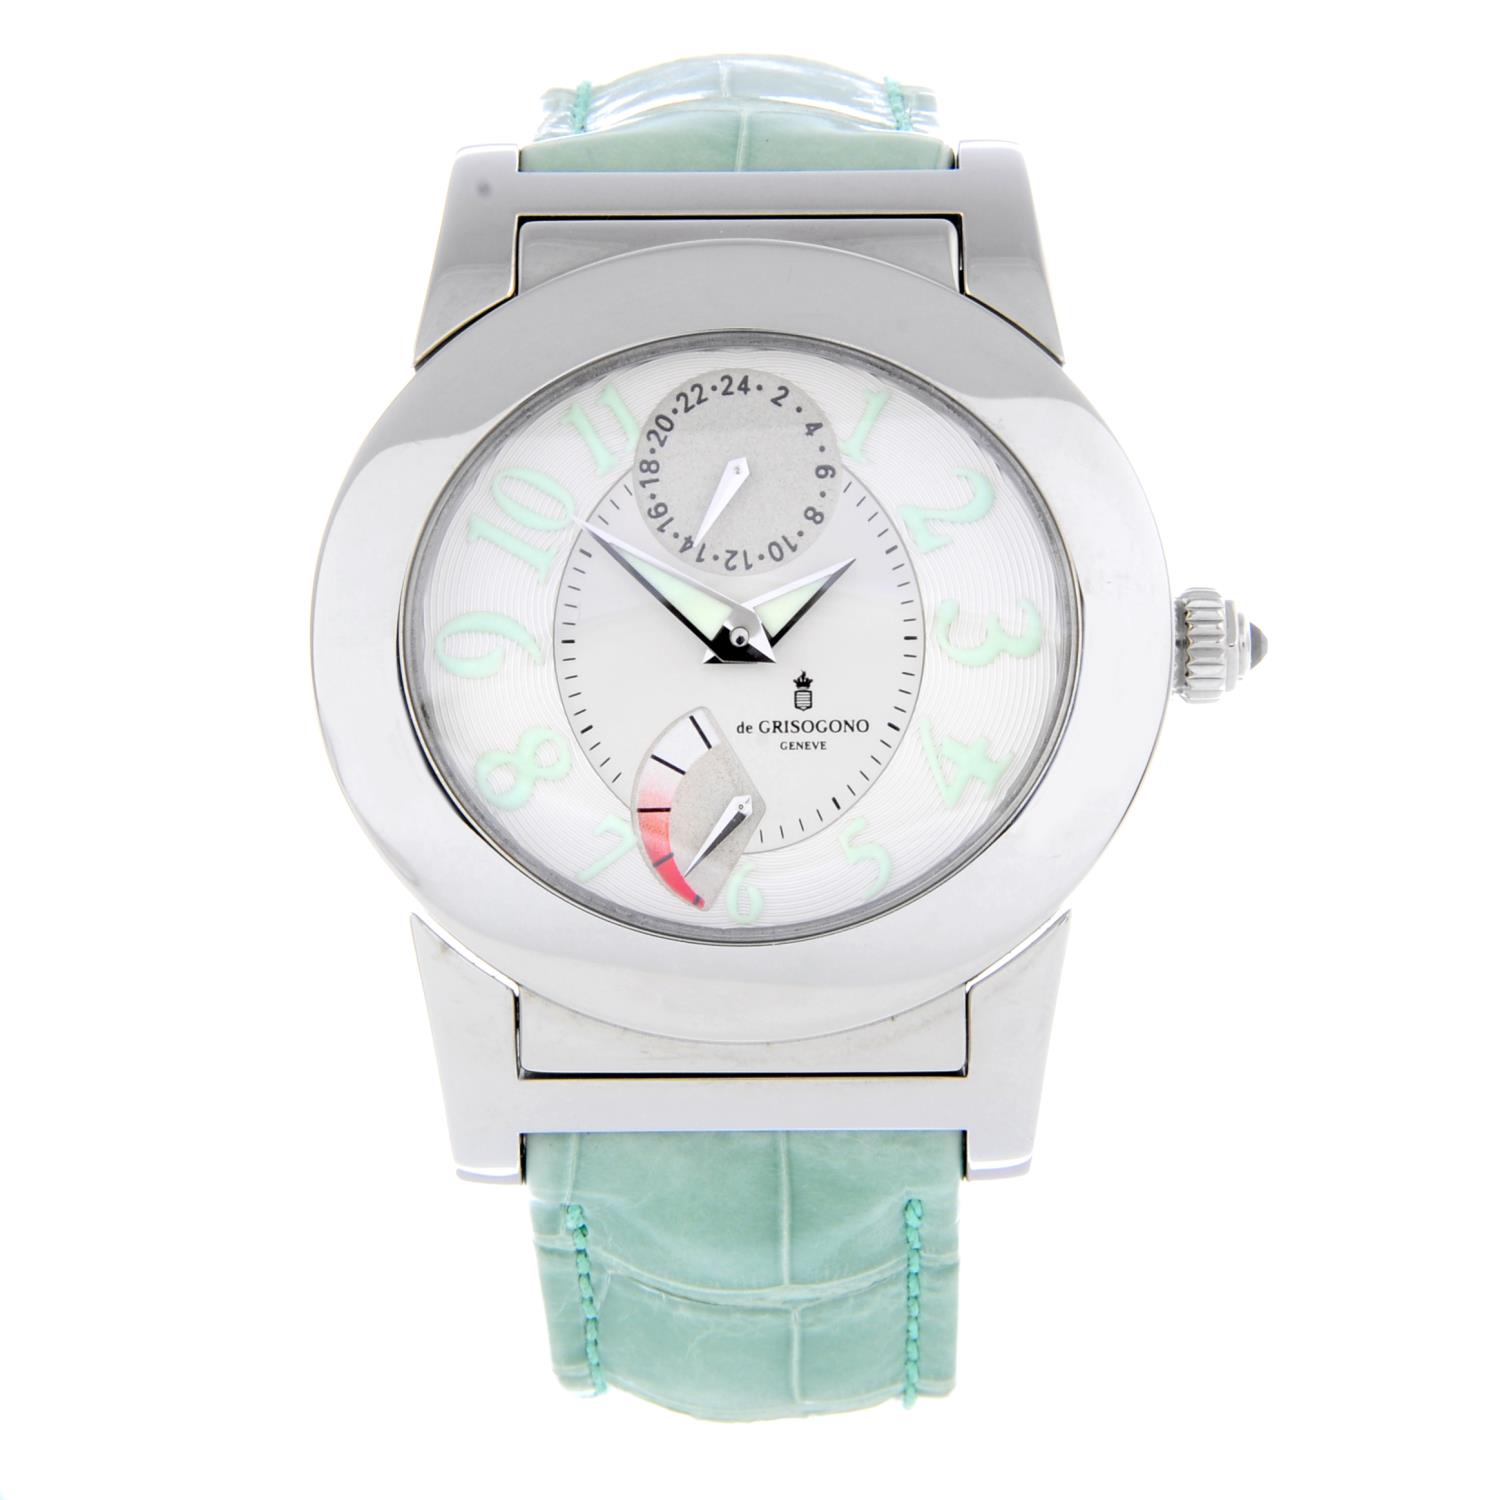 DE GRISOGONO - a mid-size Instrumento Tondo GMT wrist watch.